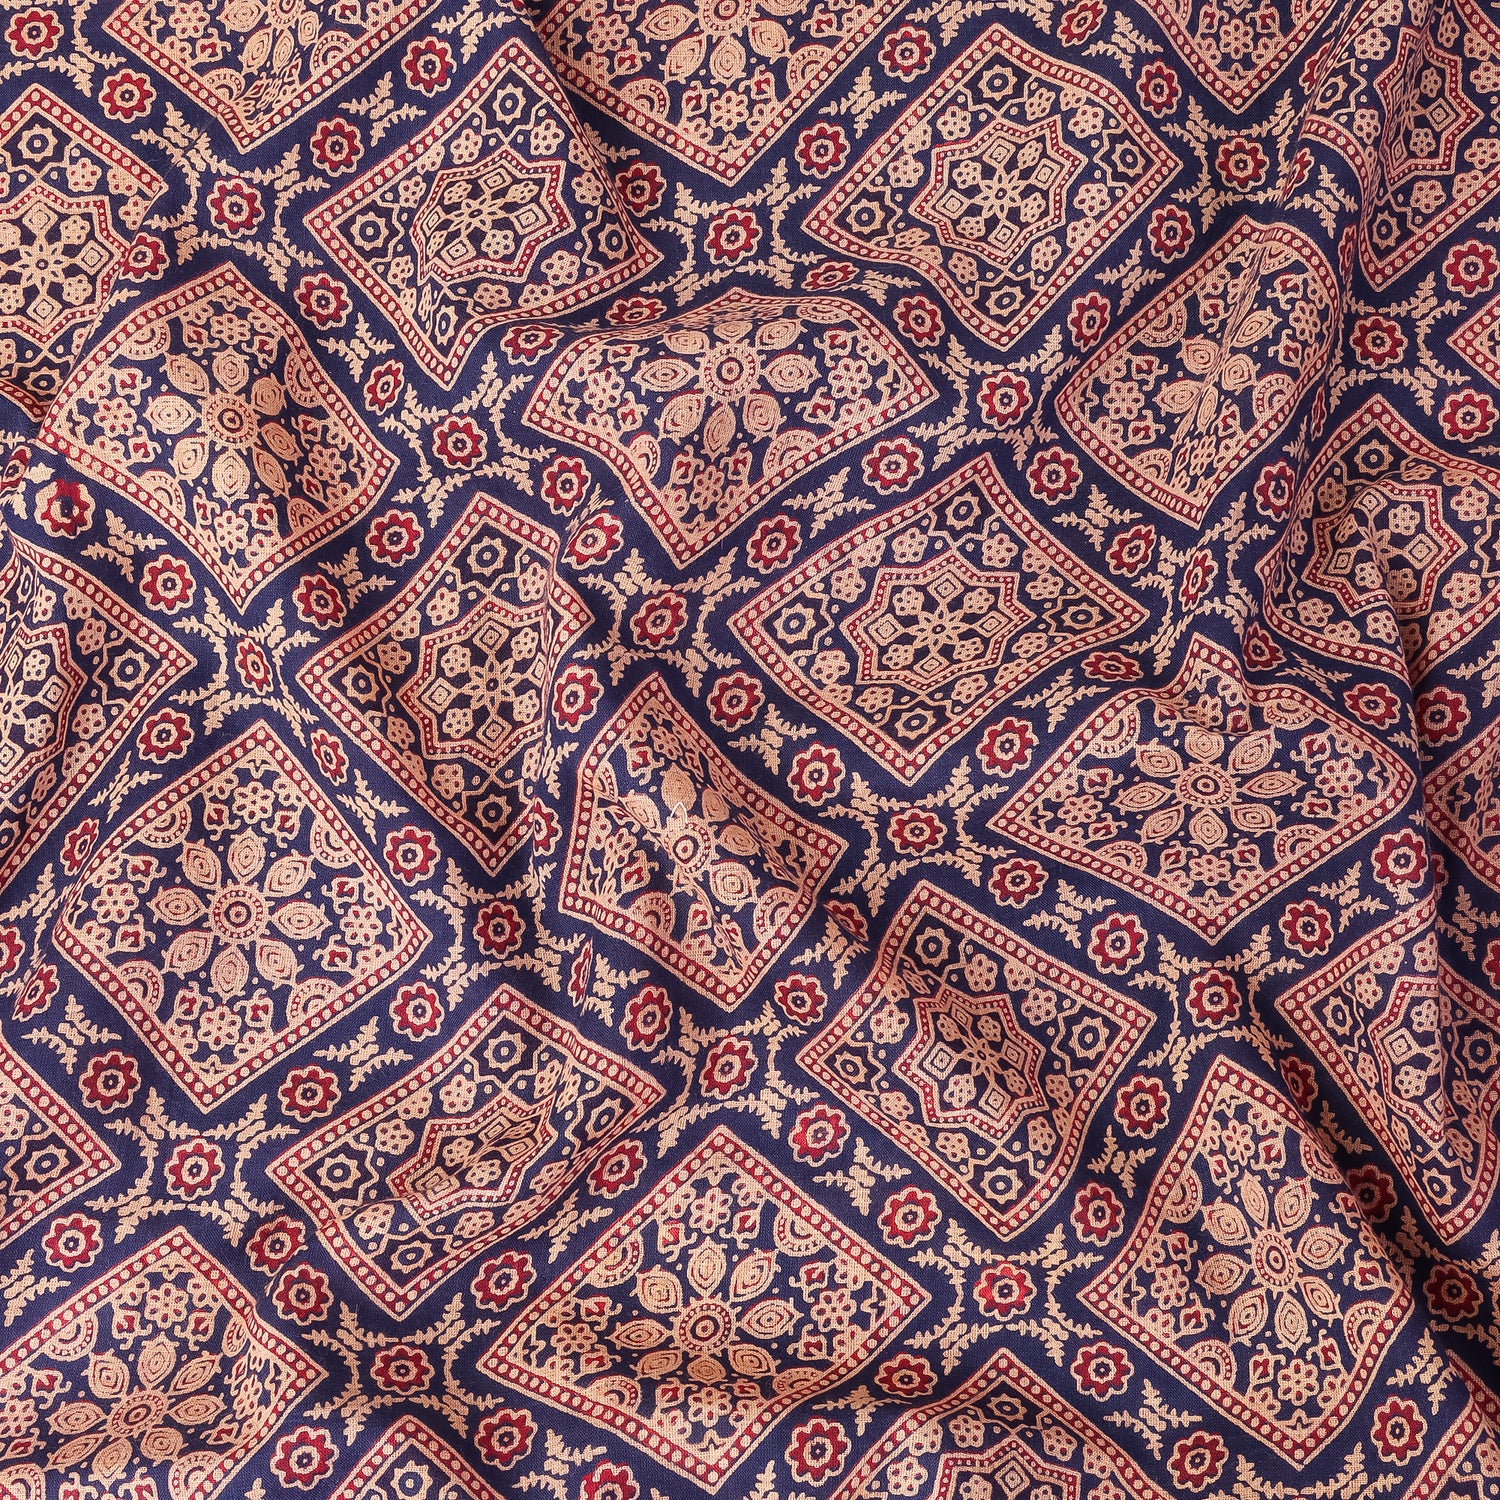 IKAT Print Fabric, Cotton Ajrakh Fabric